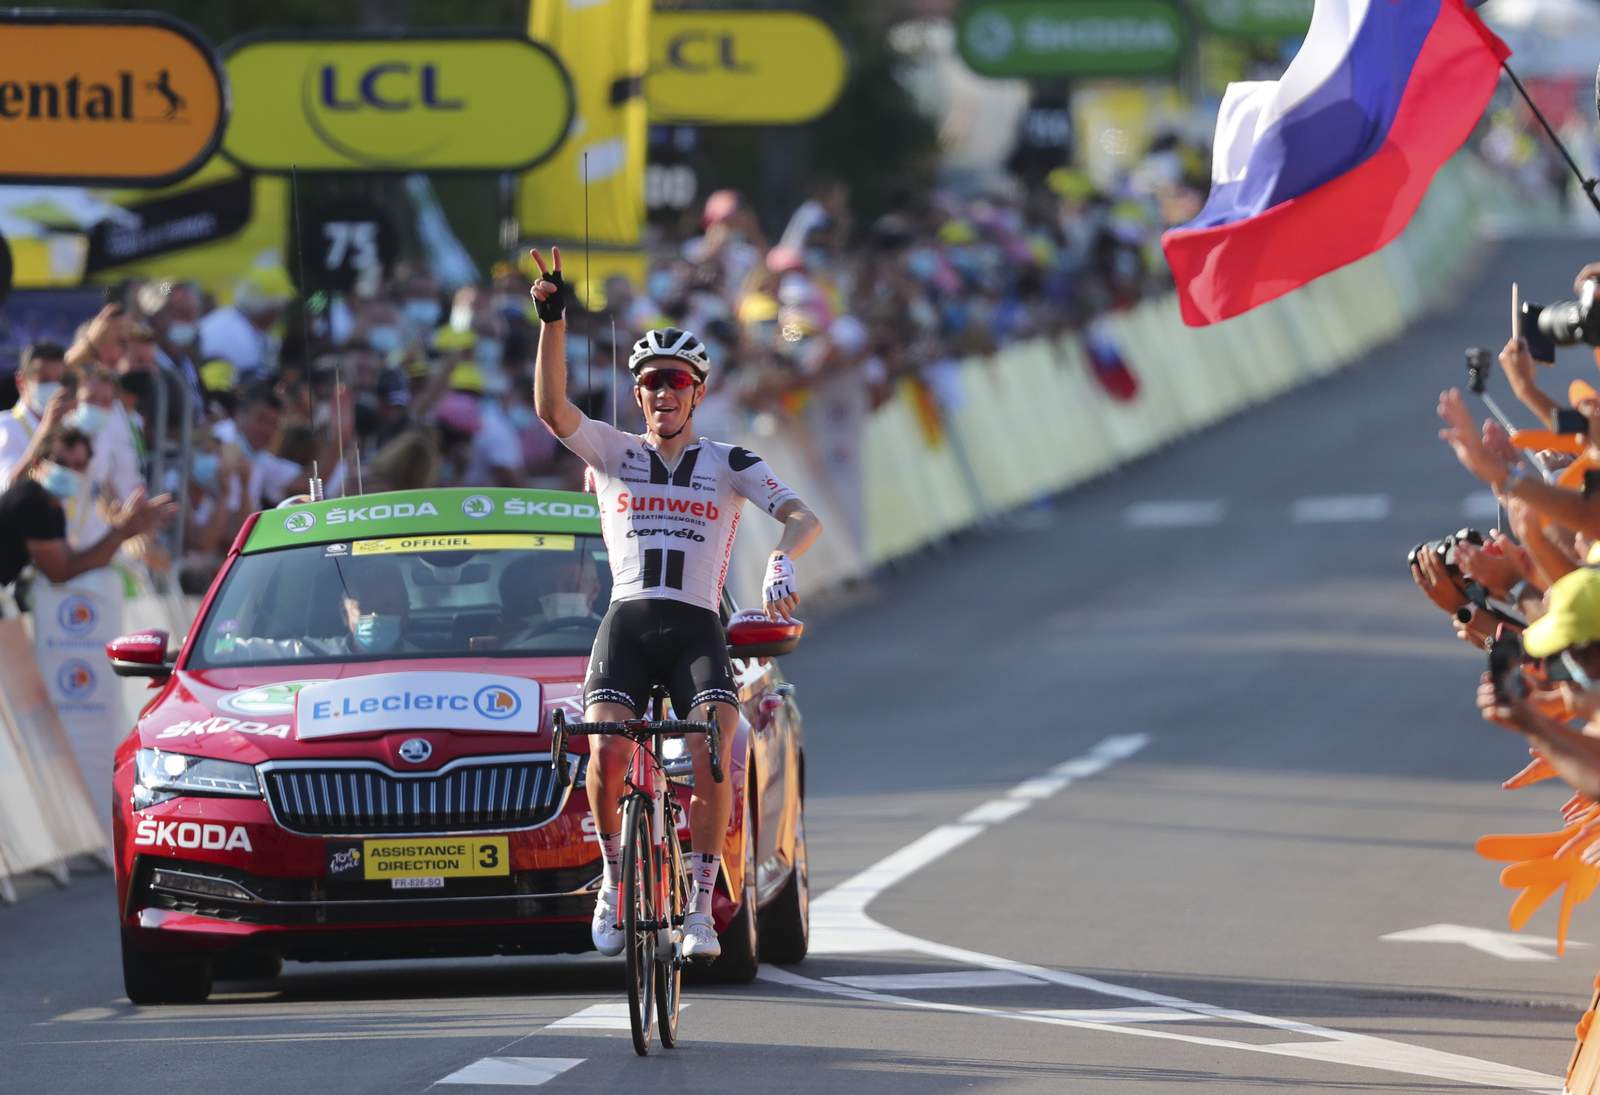 Andersen doubles down at Tour de France, wins Stage 19